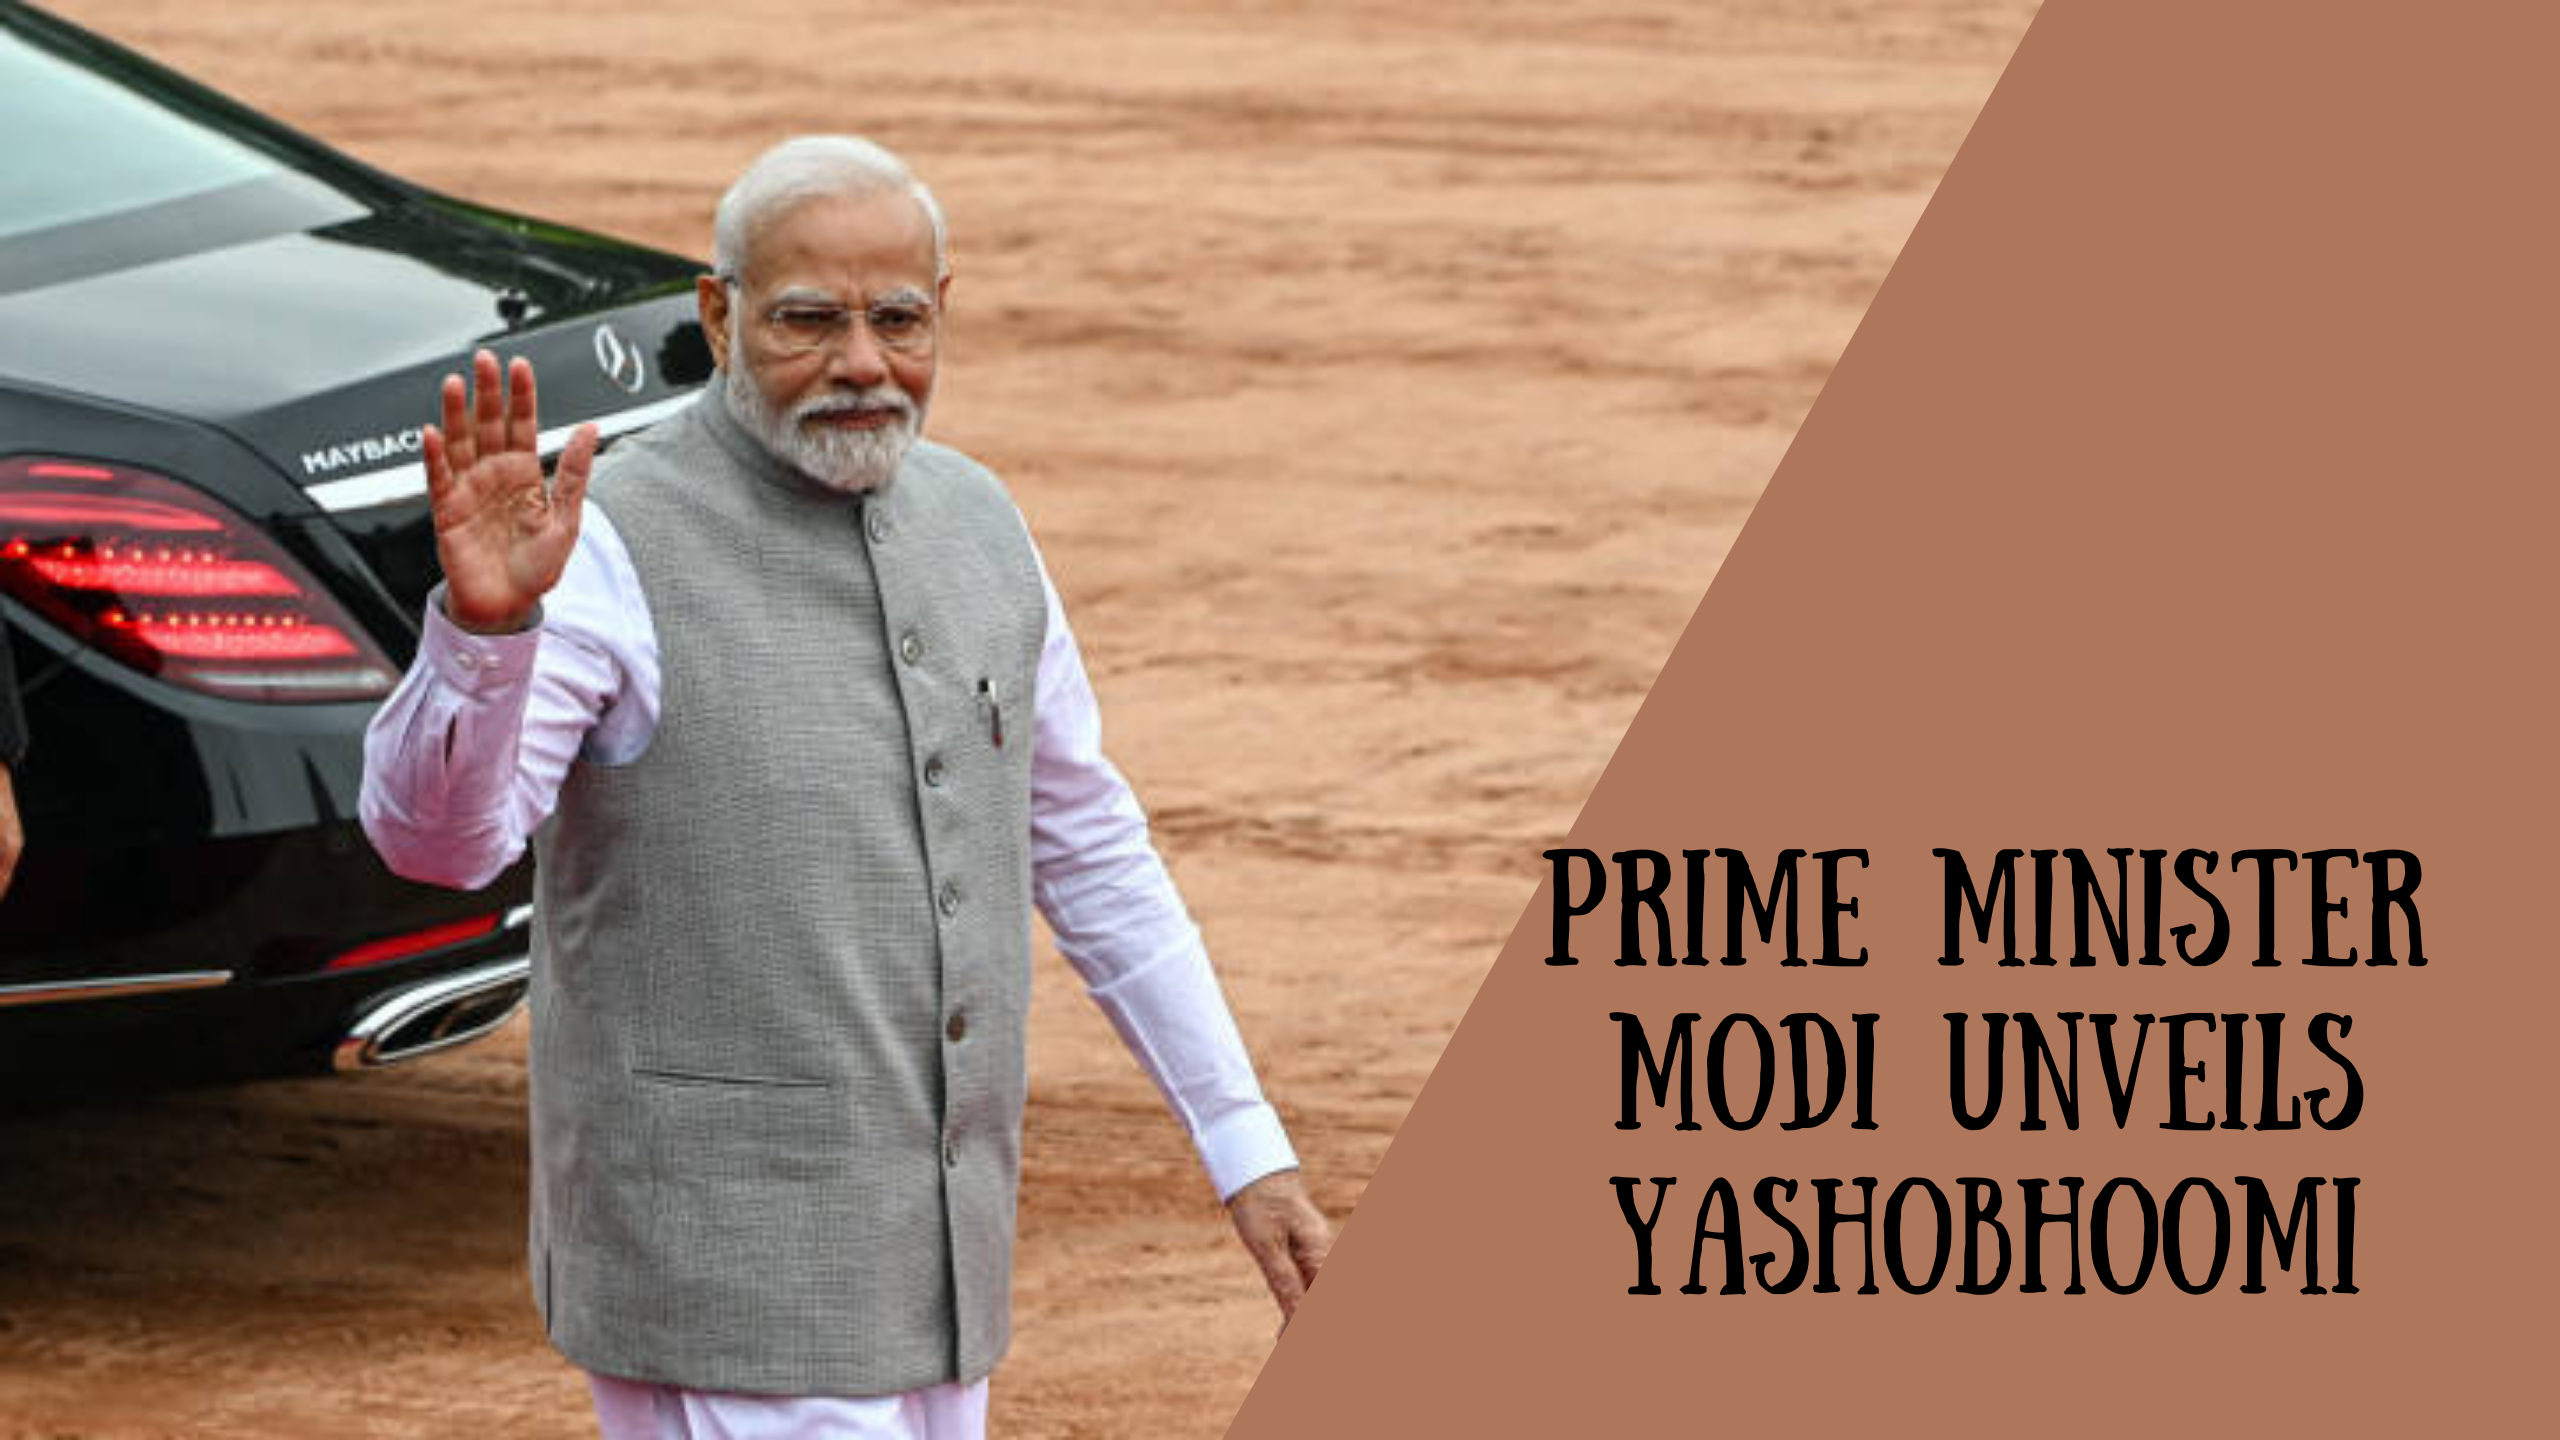 Prime Minister Modi Unveils Yashobhoomi